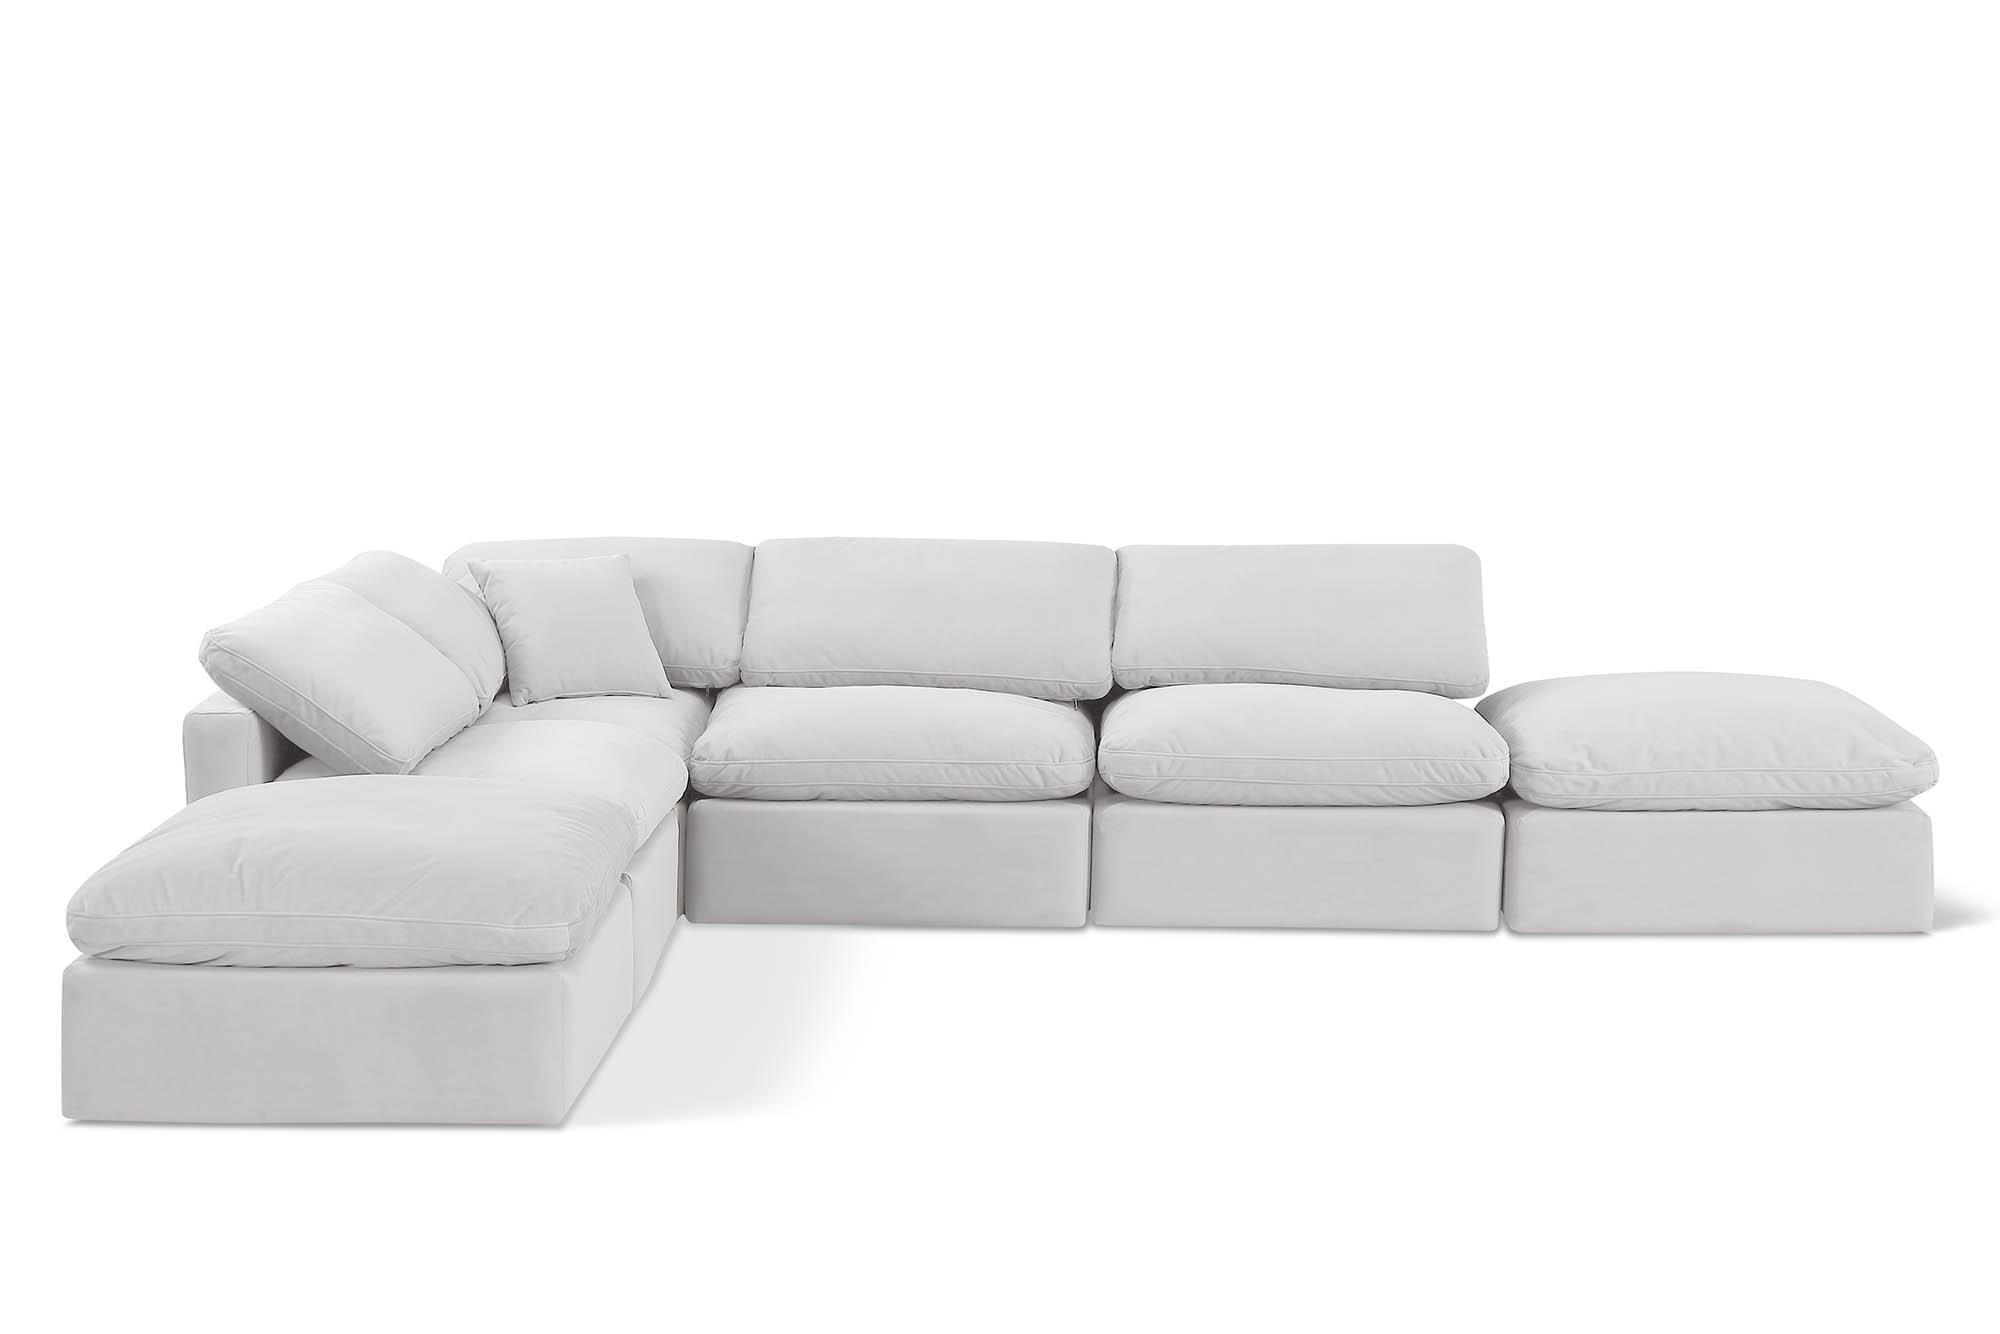 Contemporary, Modern Modular Sectional Sofa INDULGE 147Cream-Sec6E 147Cream-Sec6E in Cream Velvet